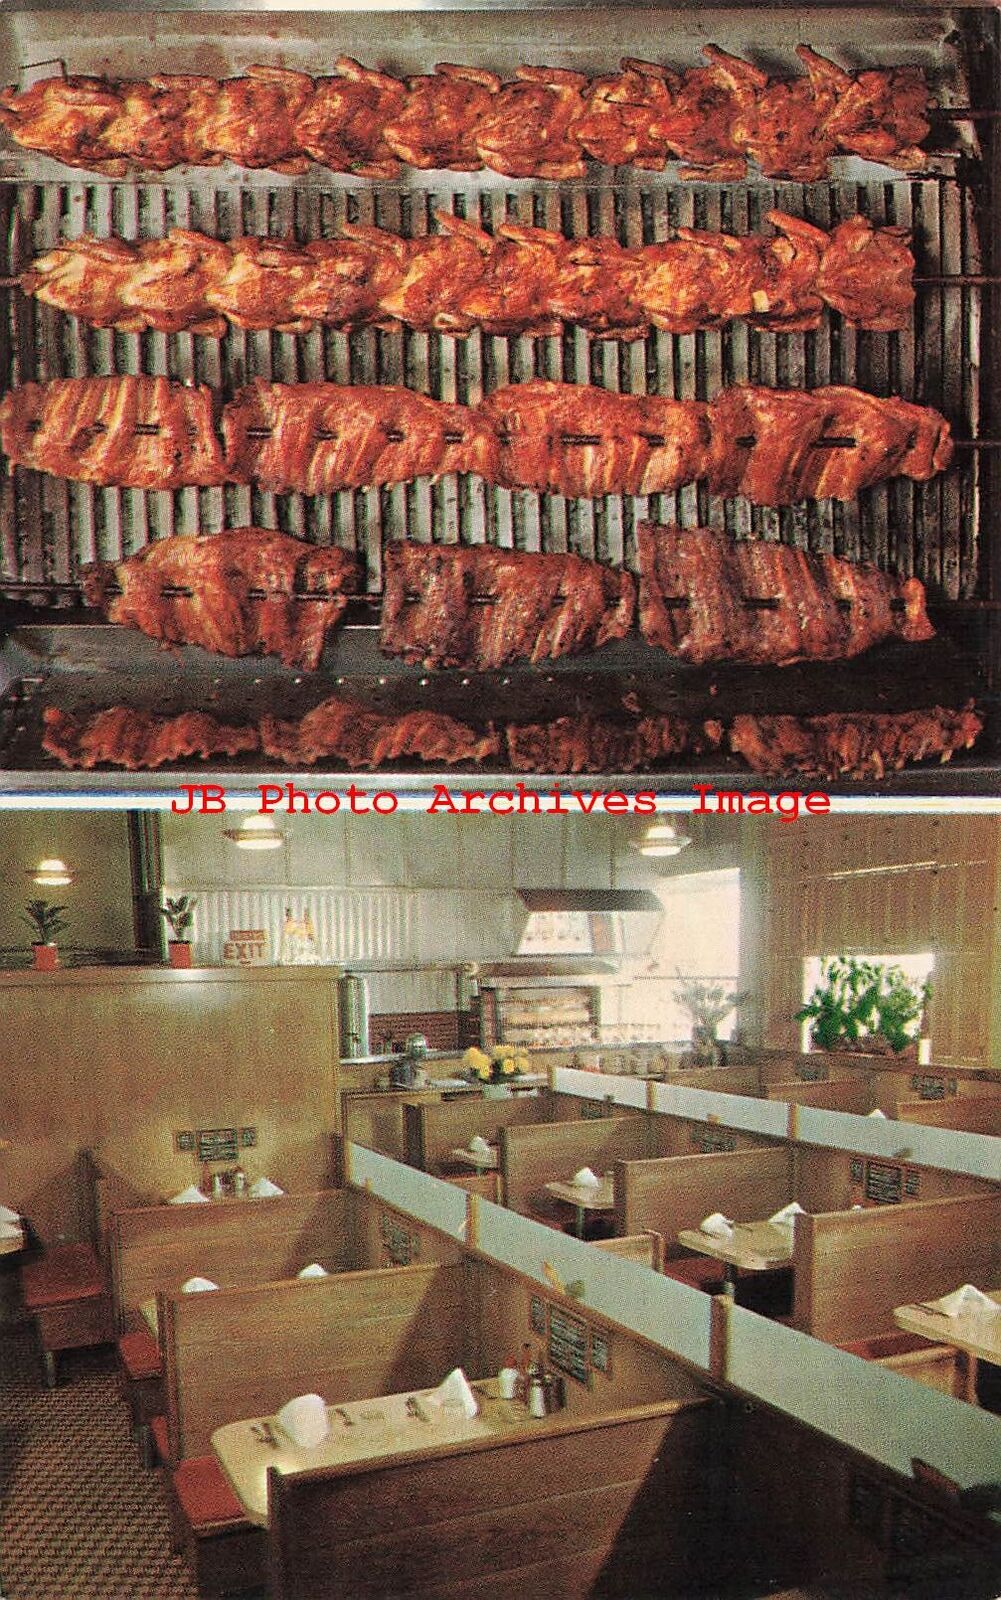 CA, Los Angeles, California, Original BBQ Restaurant, Colourpicture No P21488